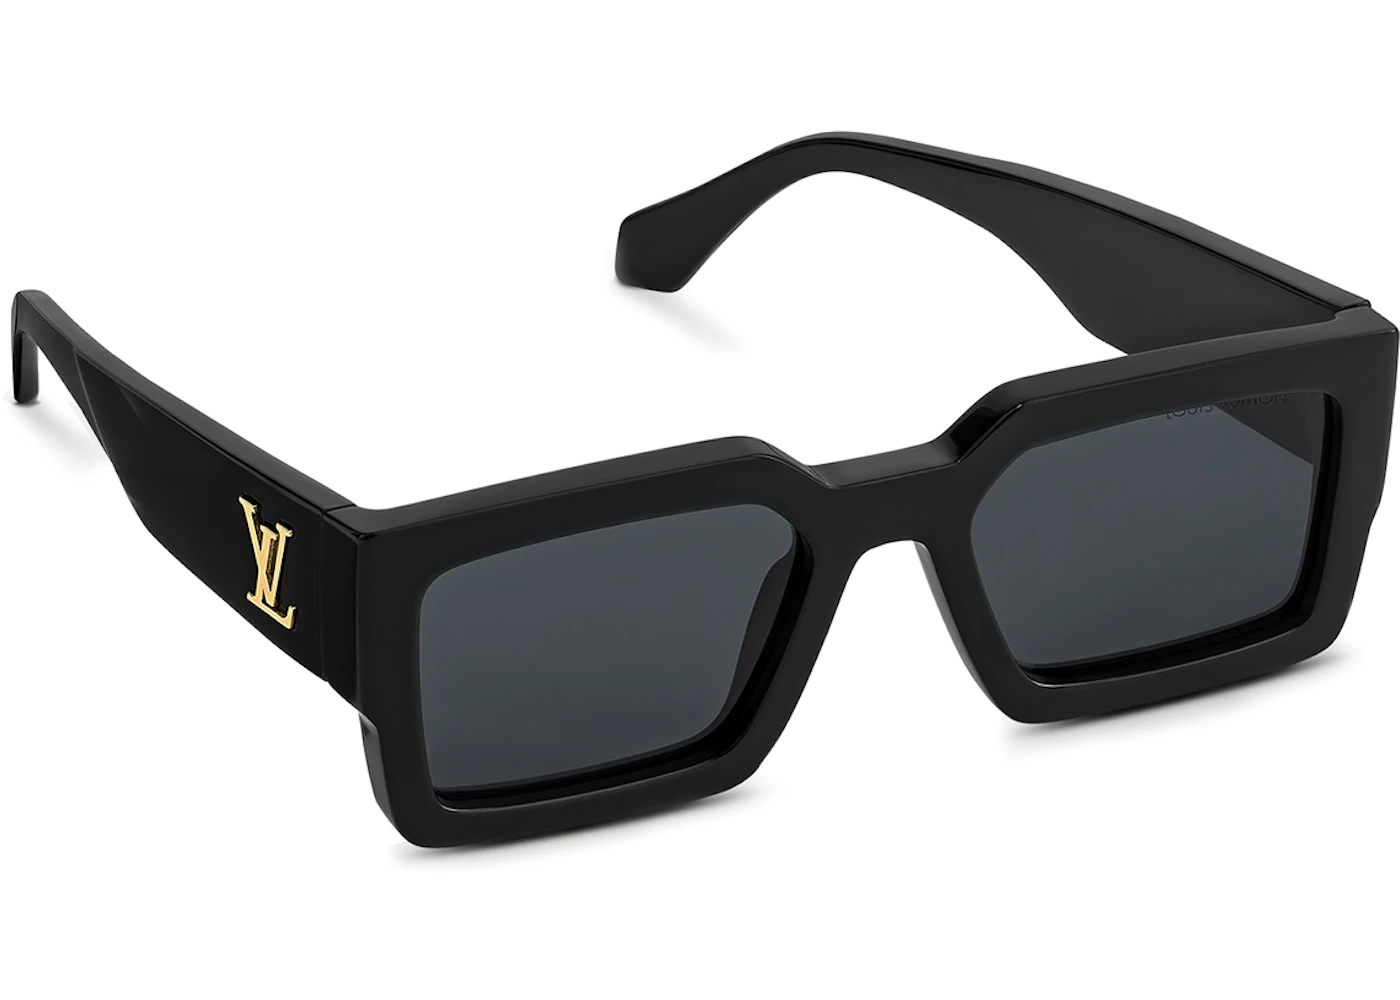 louis vuitton sunglasses black and gold